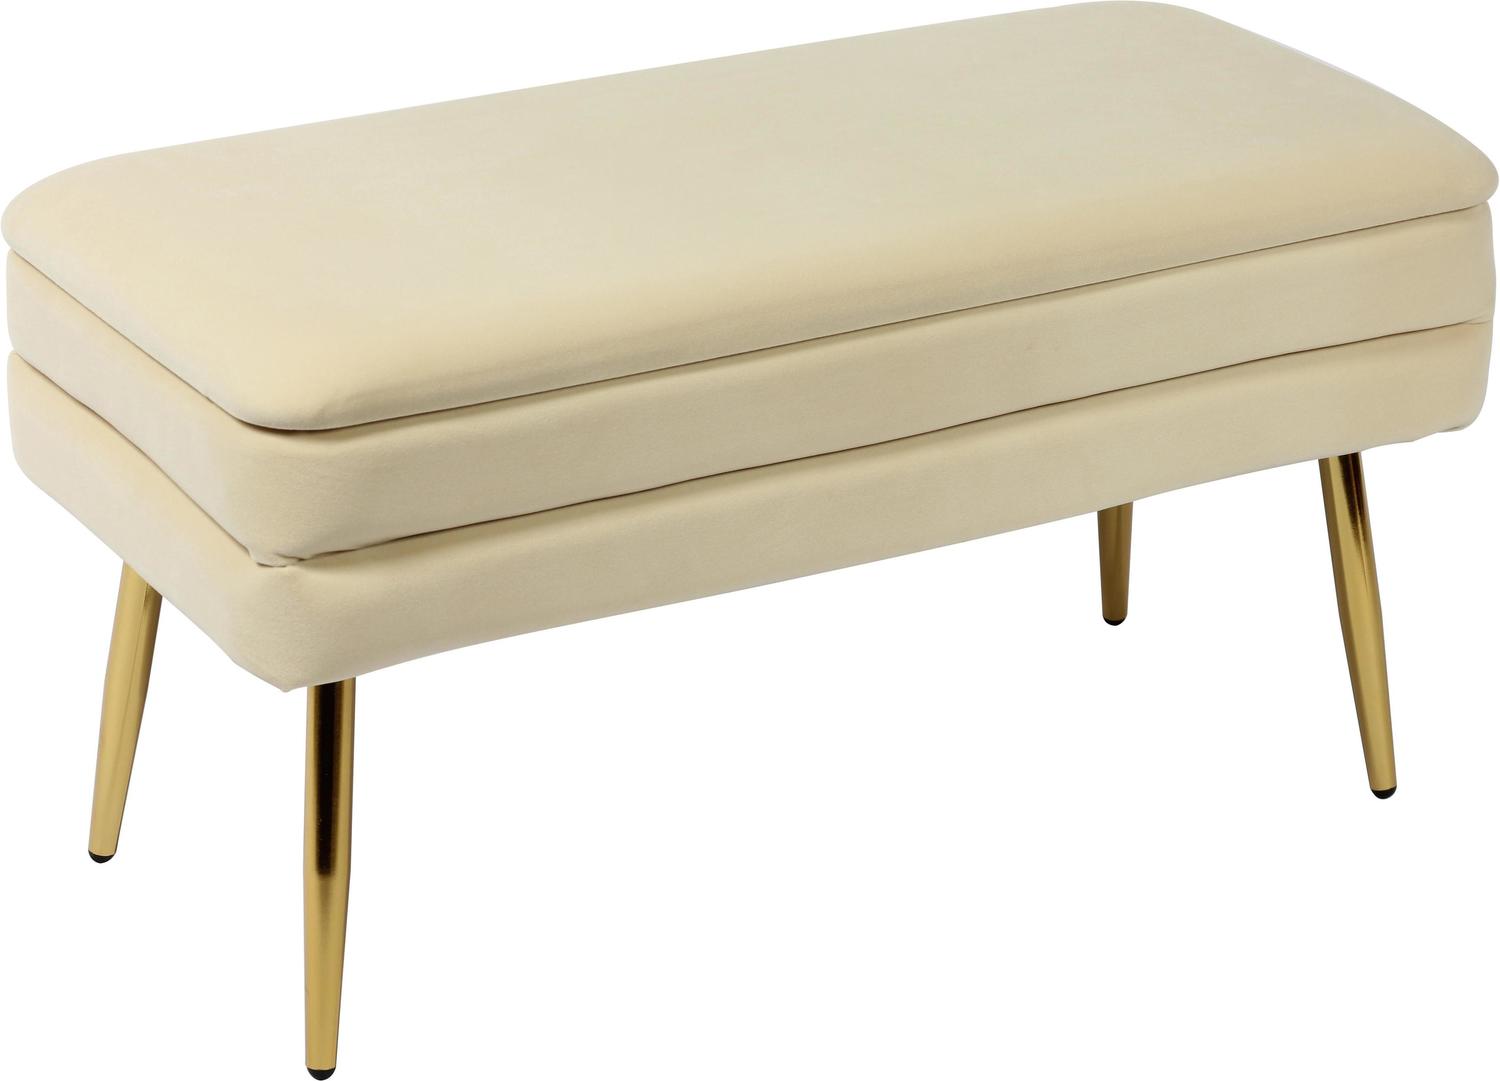 storage bench seat small Contemporary Design Furniture Benches Cream